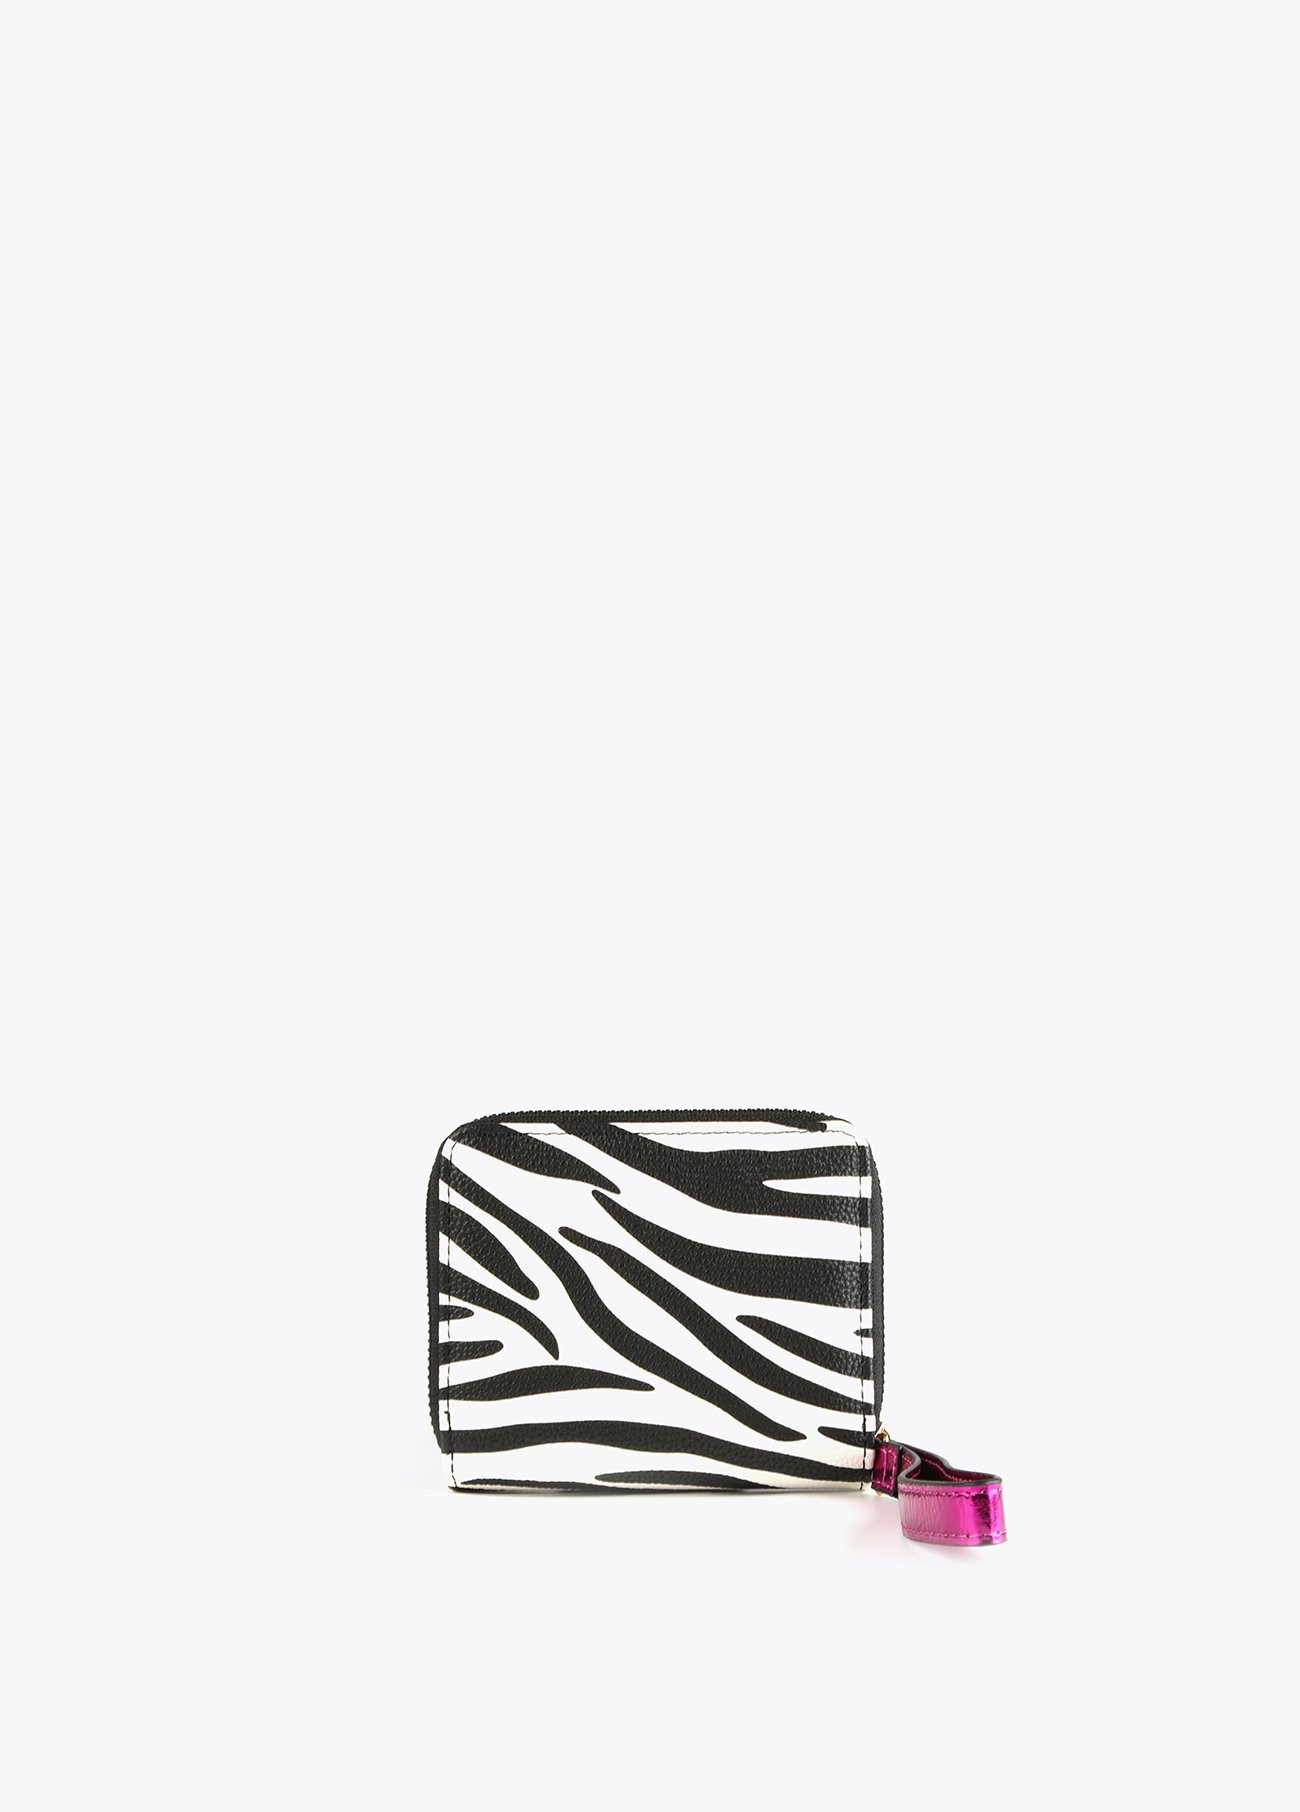 Designer Handbag, Zebra Print Pink Leather Spacious Tote Bag, Perfect  Anniversary Gift for Wife, Useful Gift for Mom, Roomy Practical Bag - Etsy  Hong Kong